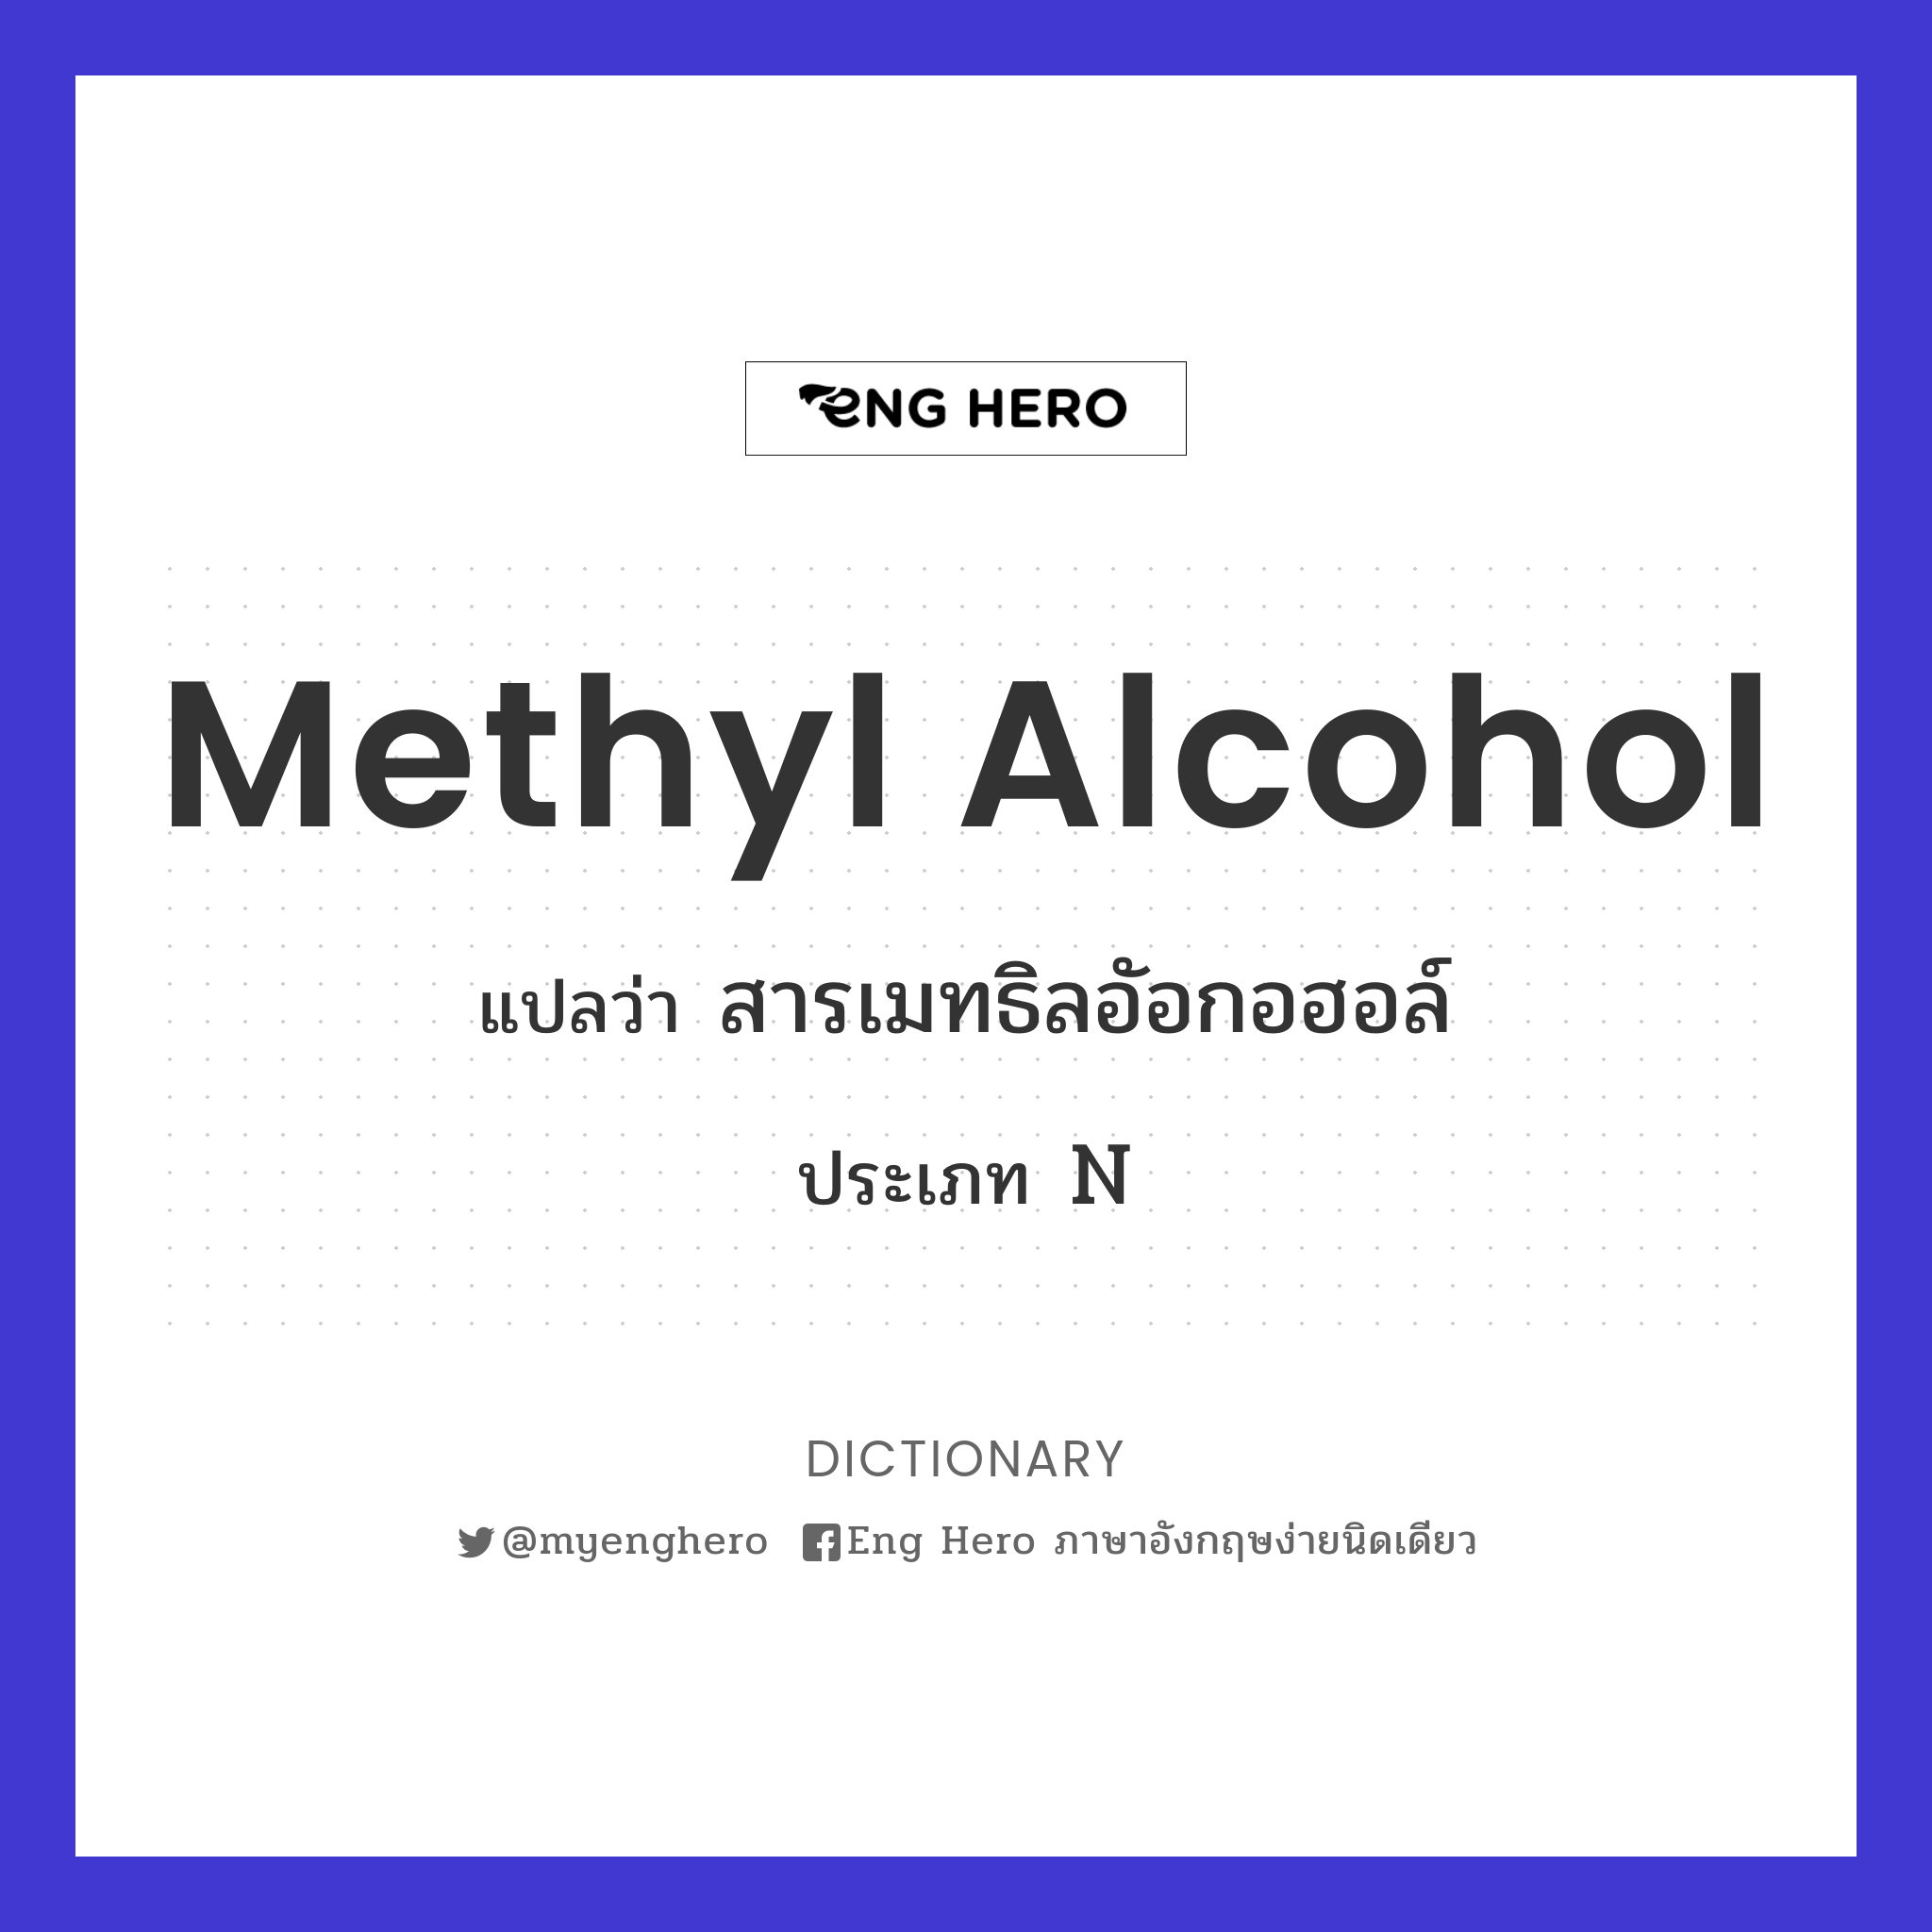 methyl alcohol